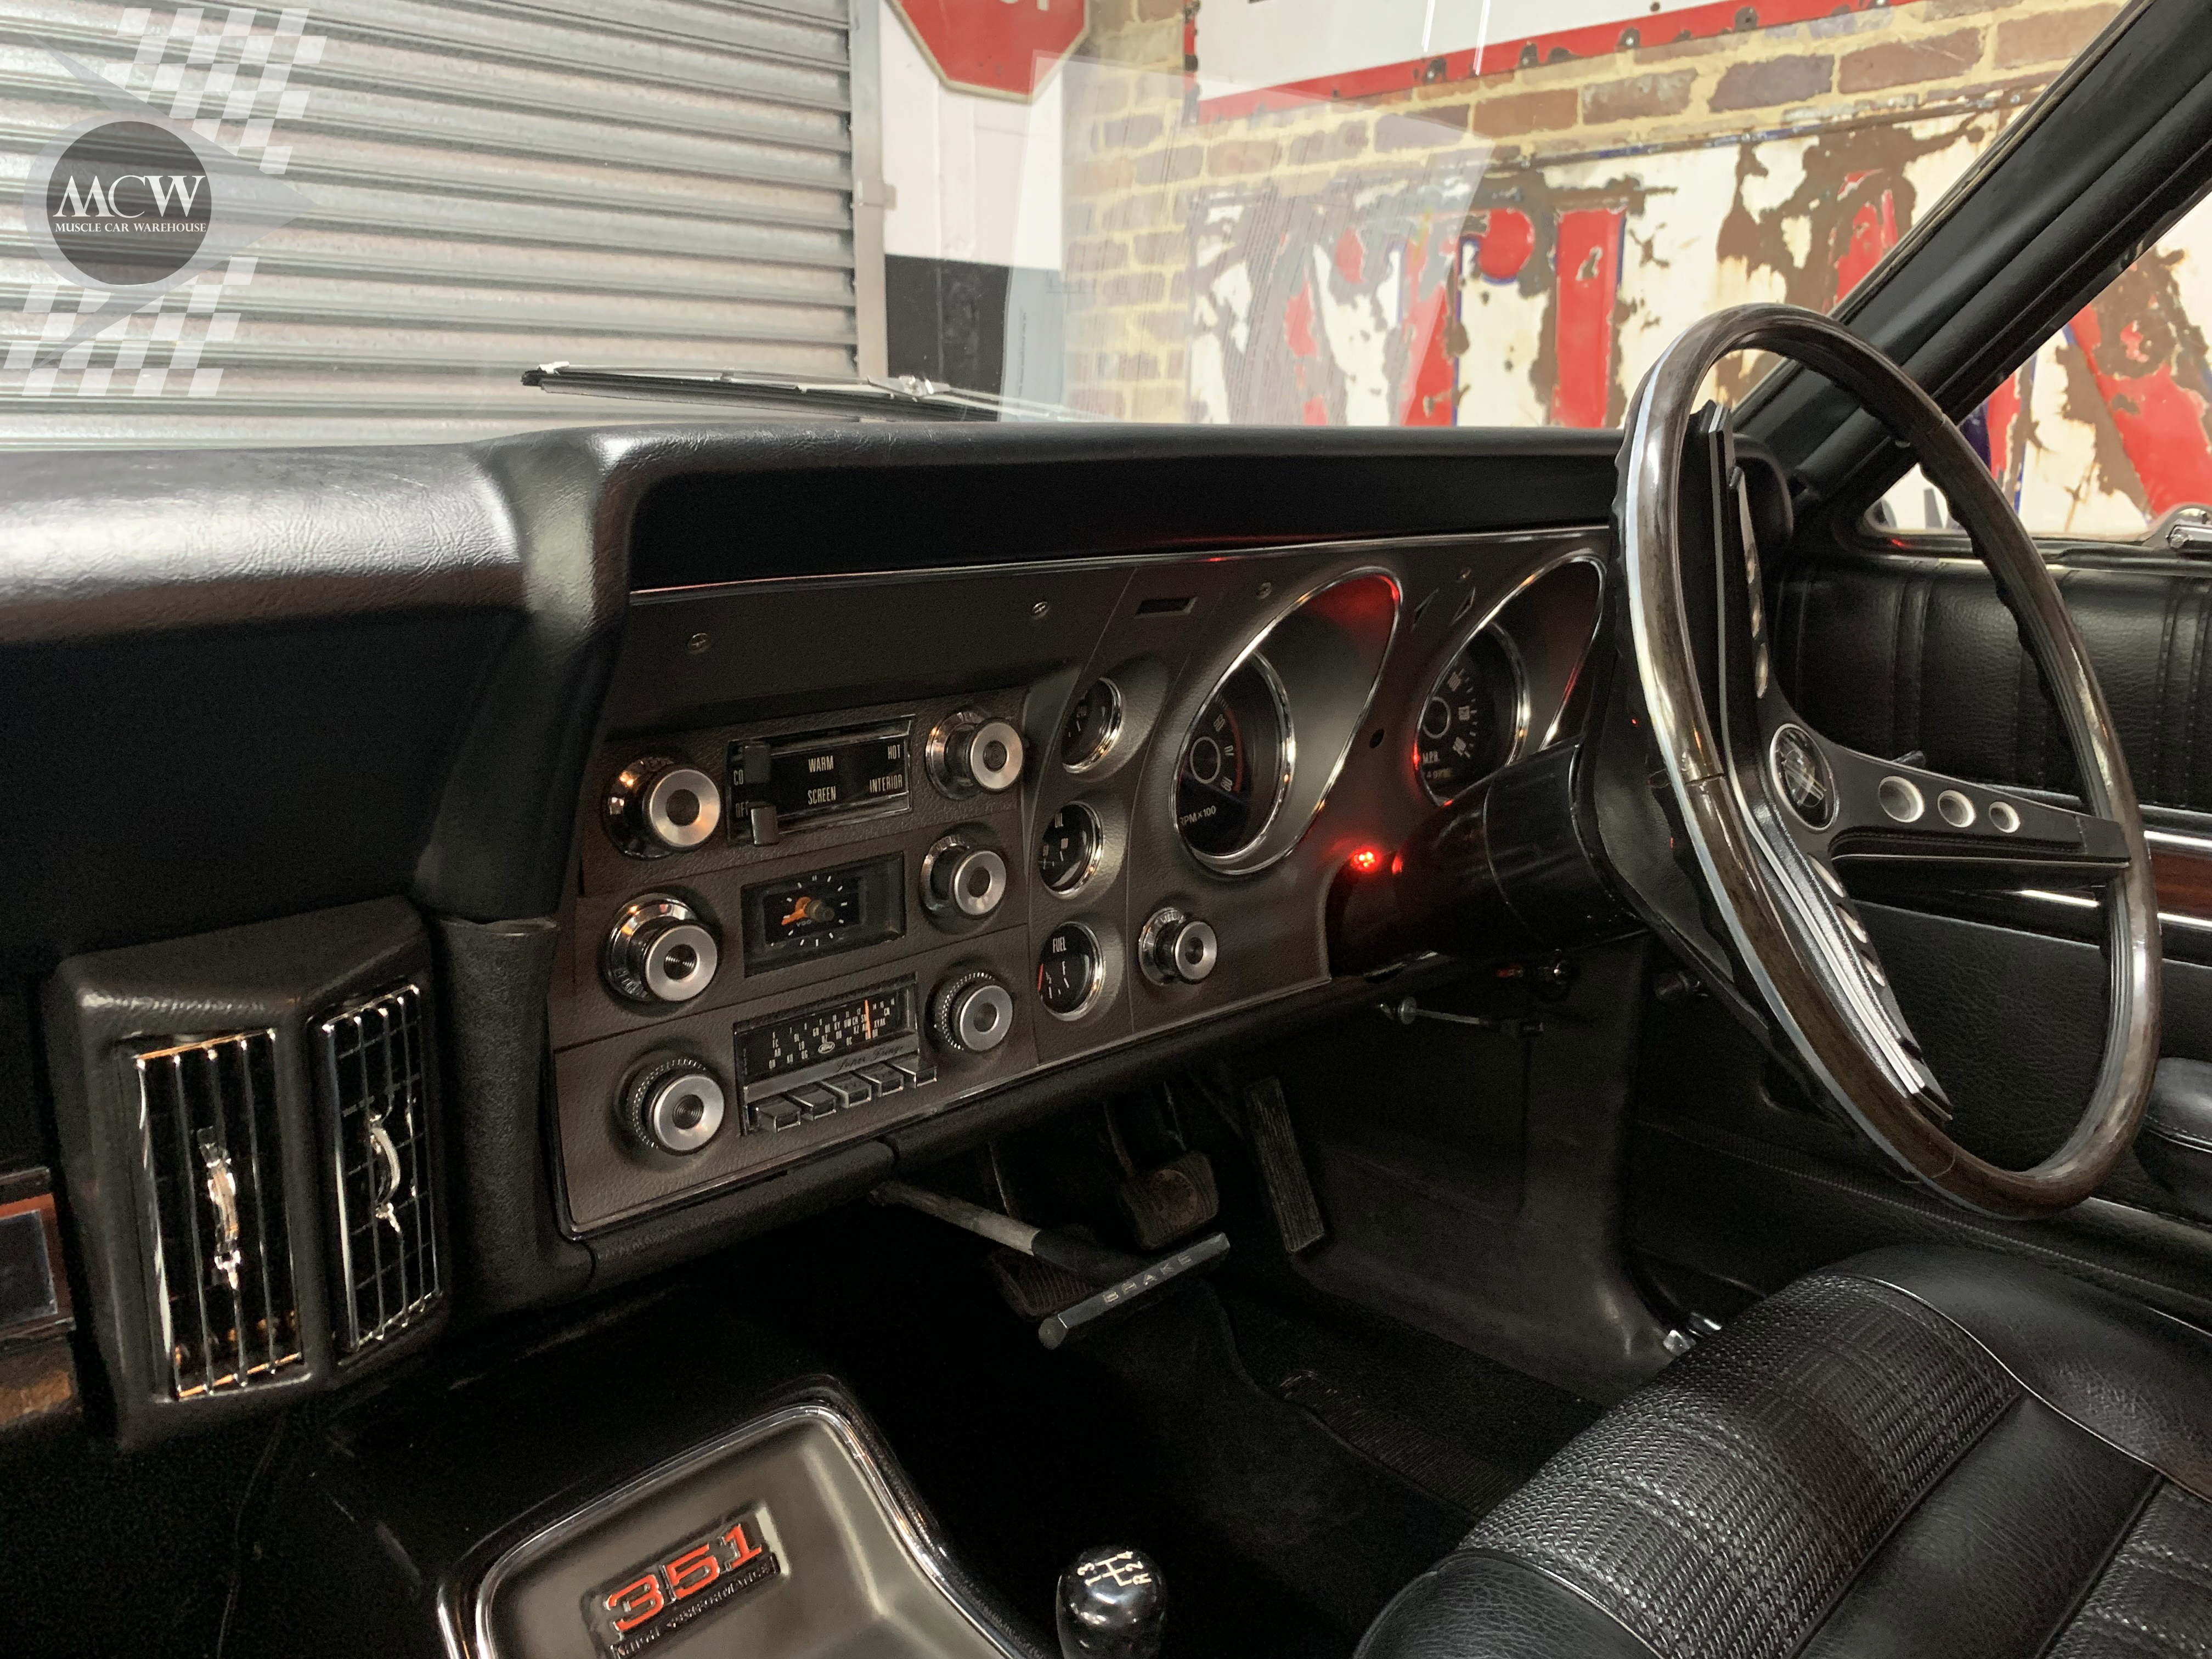 1971 Ford Falcon XY GTHO Replica Interior | Muscle Car Warehouse